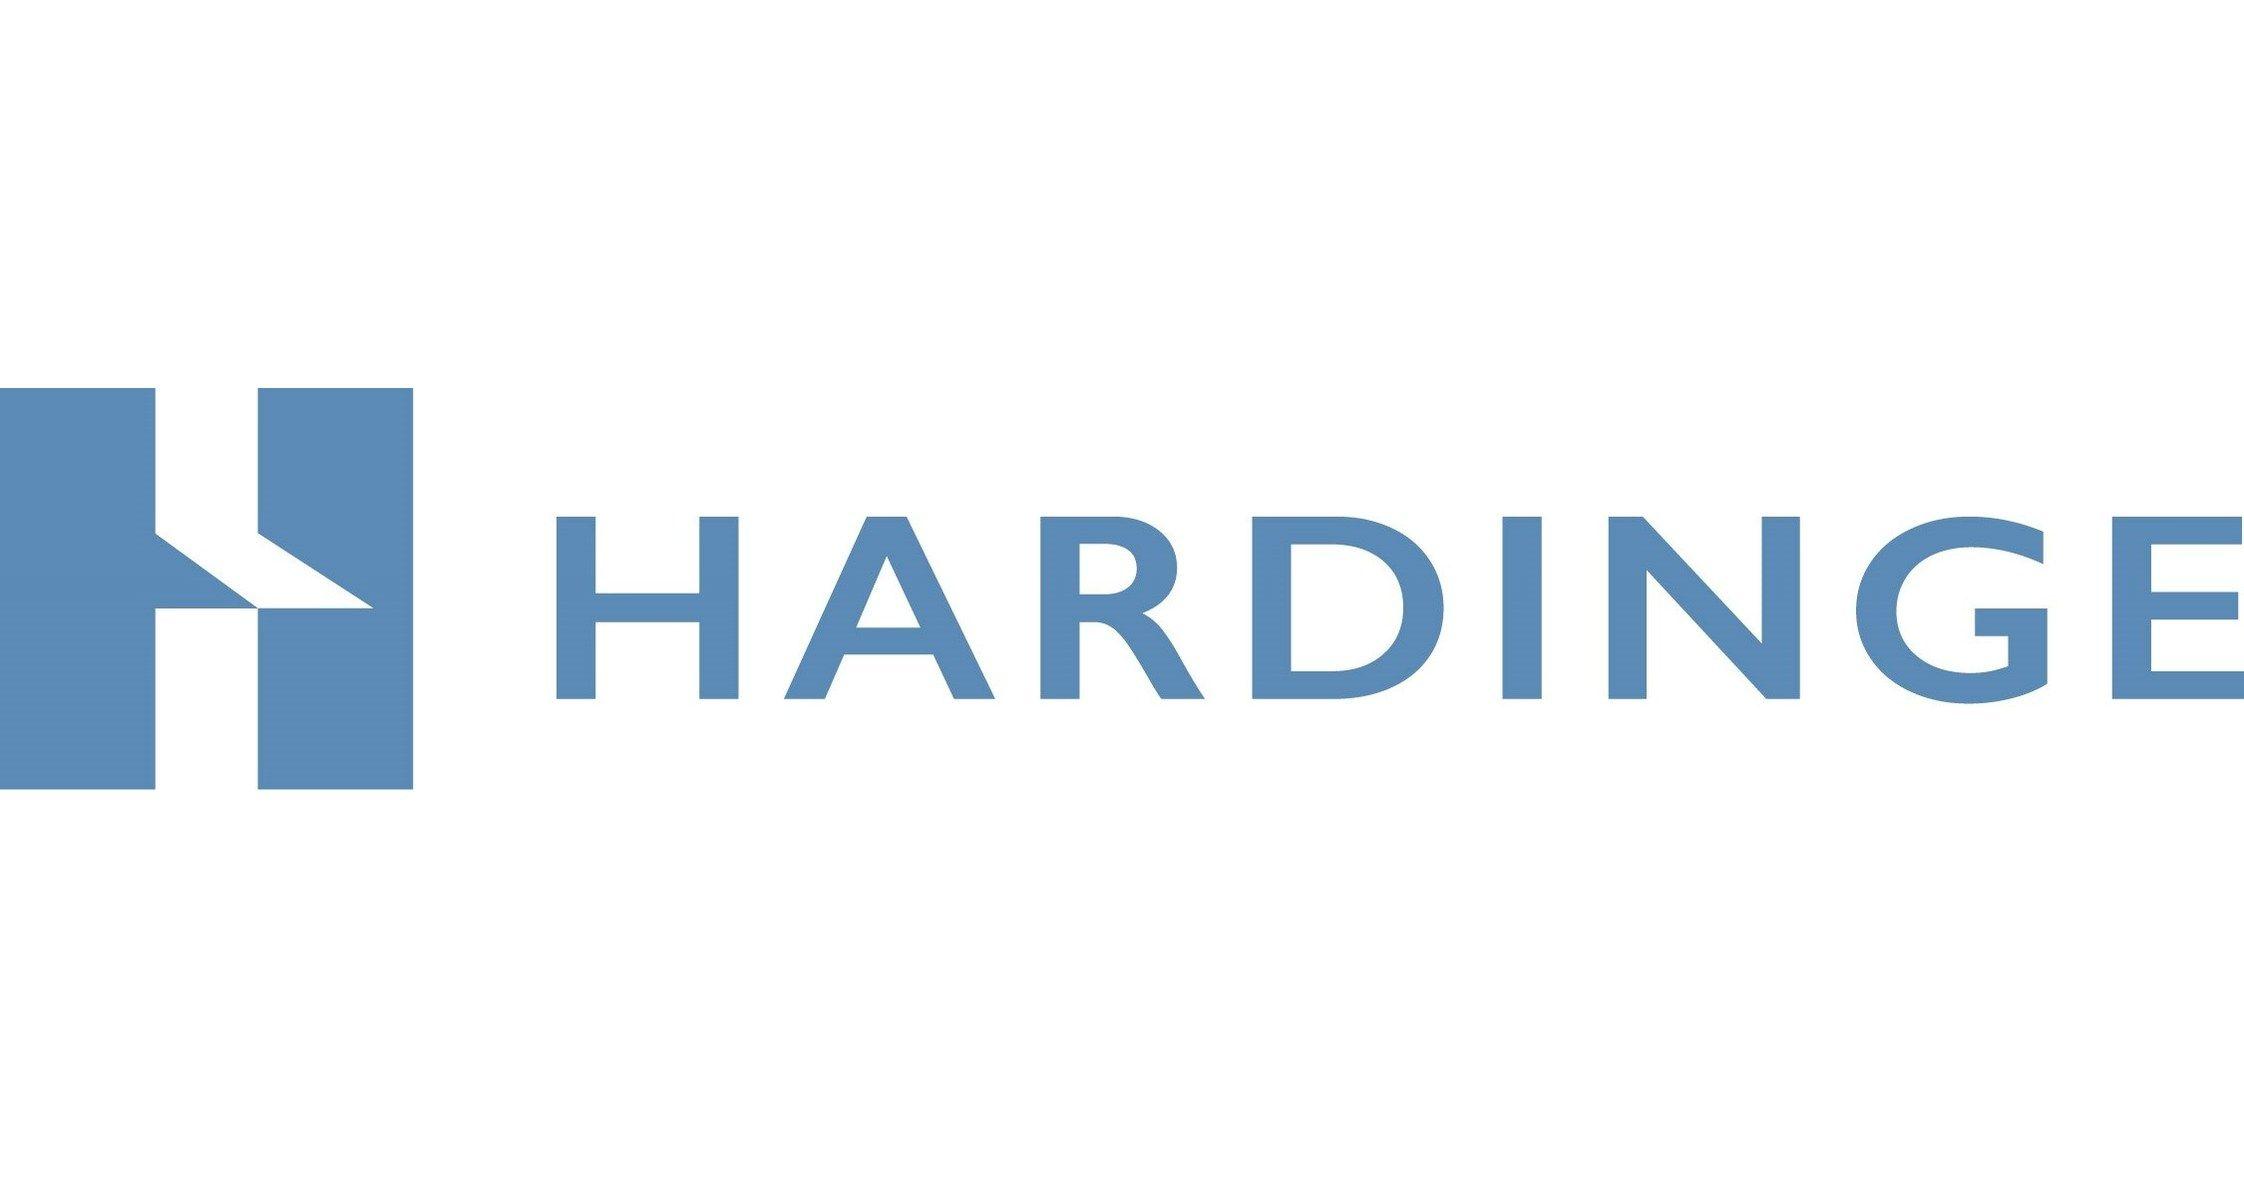 Hardinge Logo - Hardinge Reports Robust 2018 Growth With Strong Demand In China